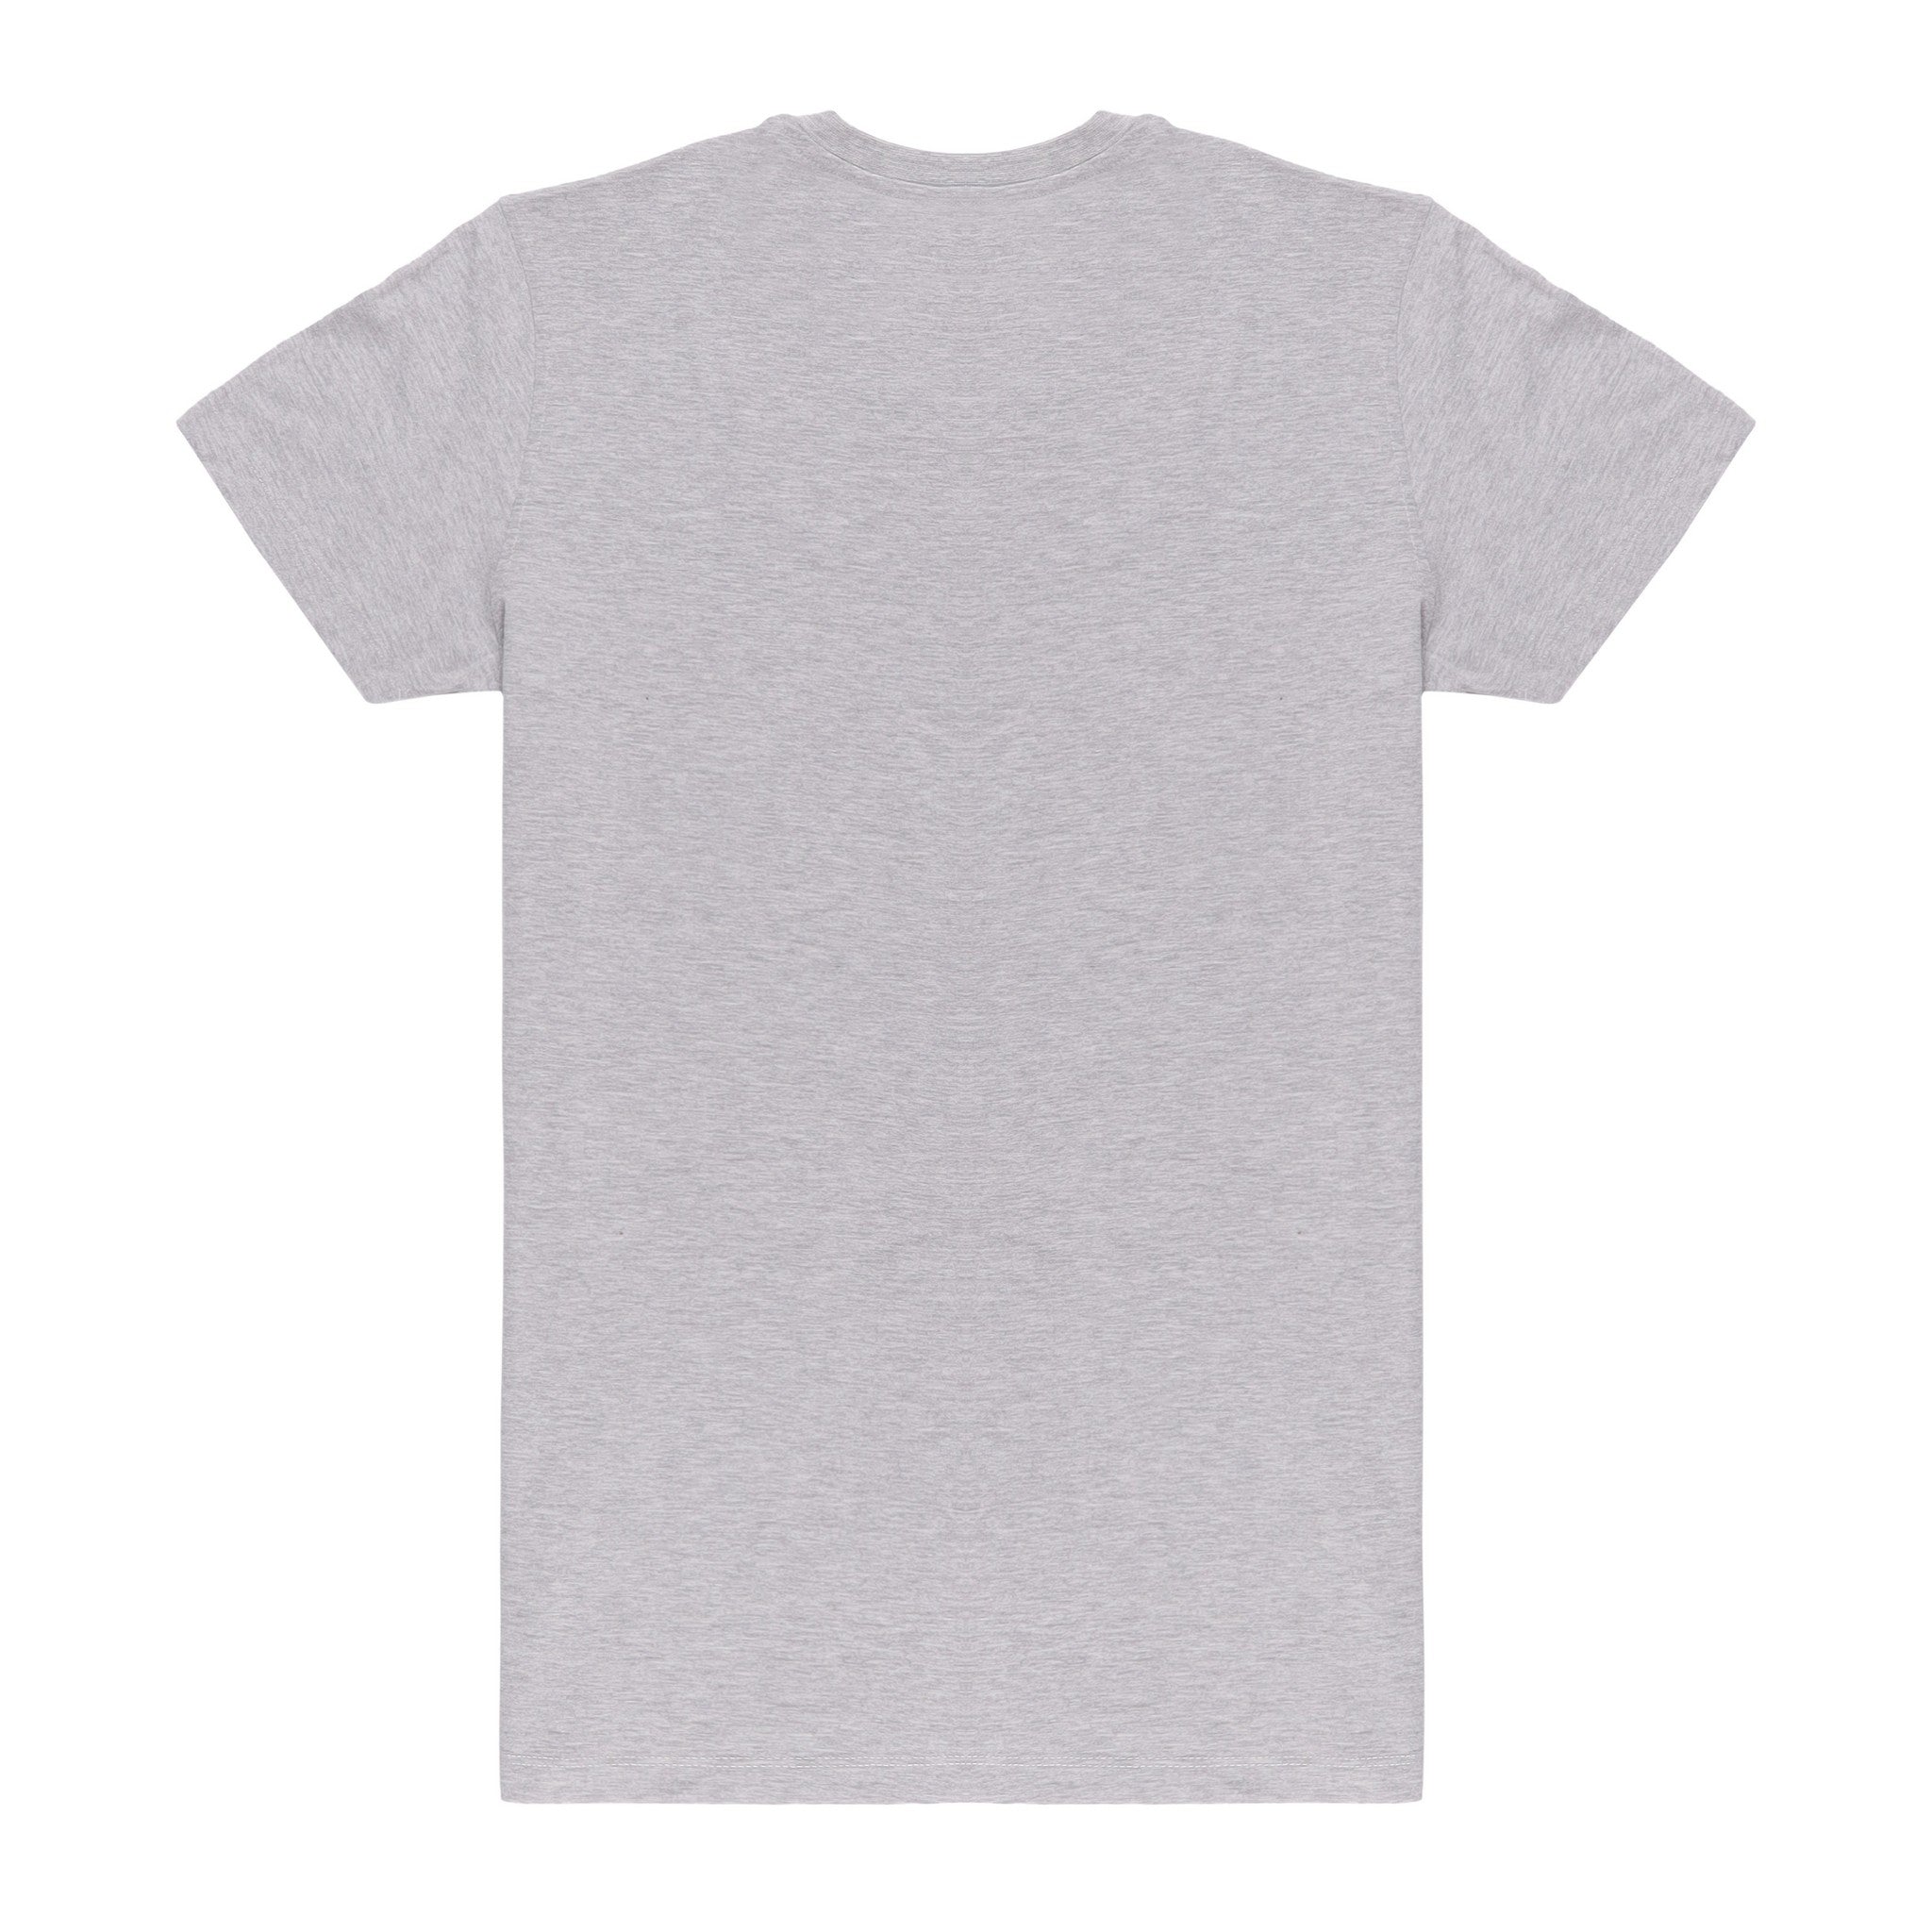 Scouting Legion Print Grey T-Shirt